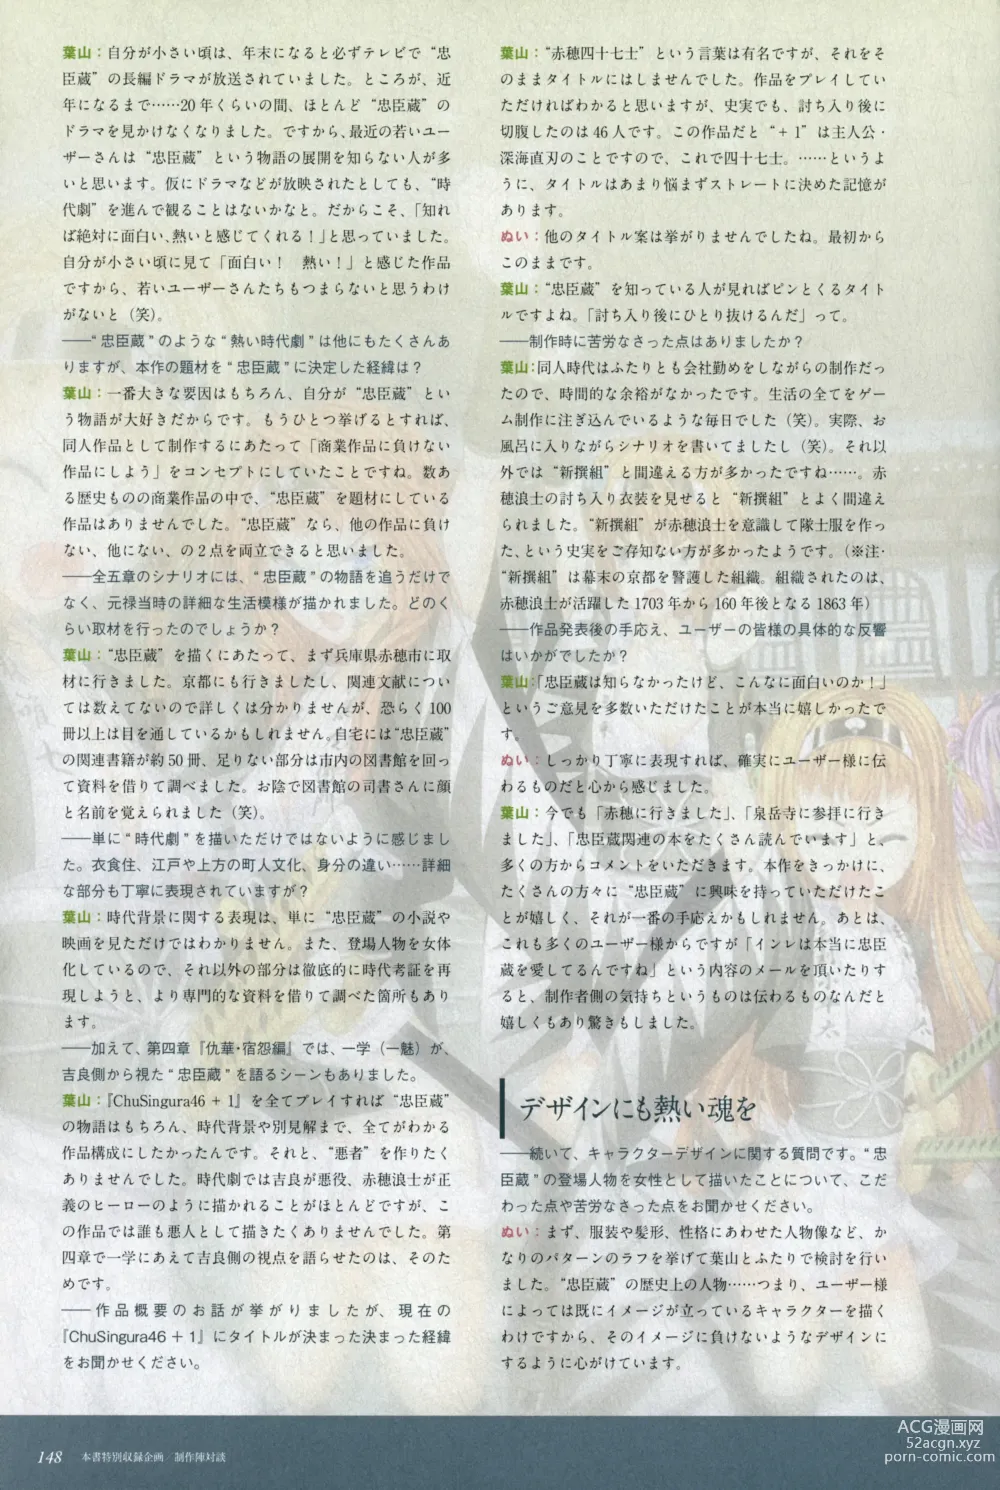 Page 150 of manga ChuSinGura 46+1 Official Visual Fan Book